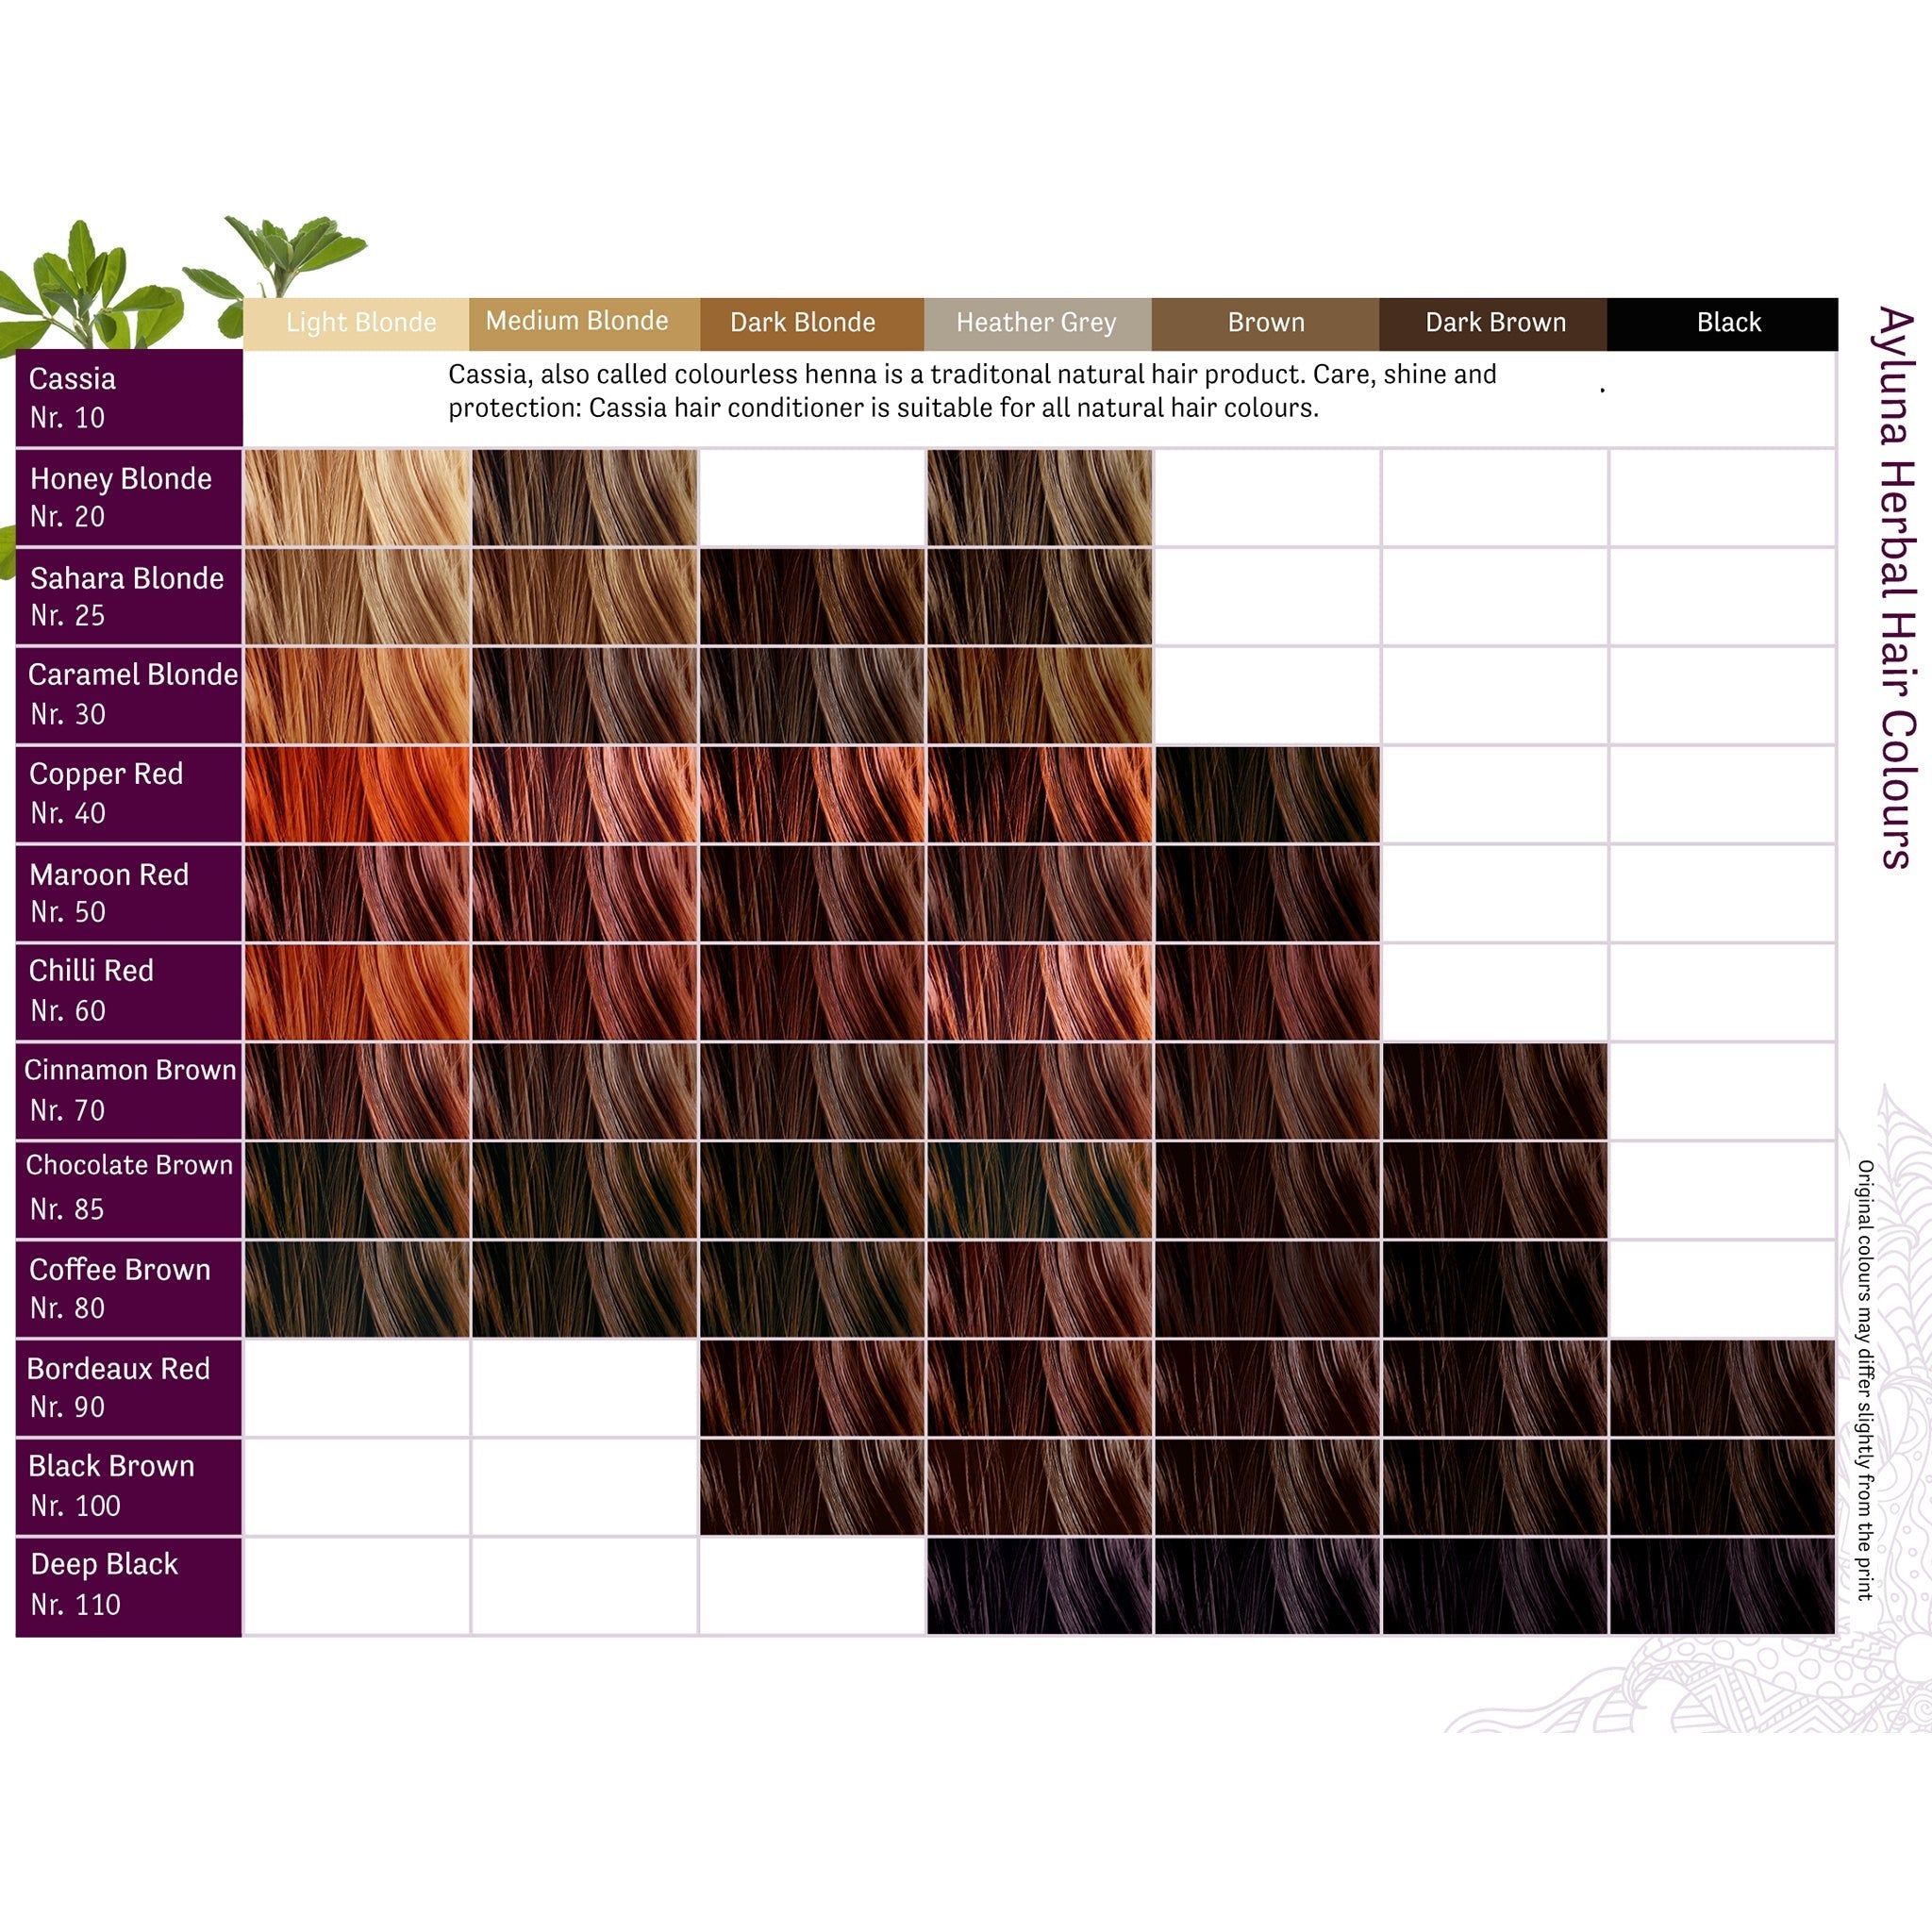 Plant-based Hair Dye - Chocolate Brown - mypure.co.uk